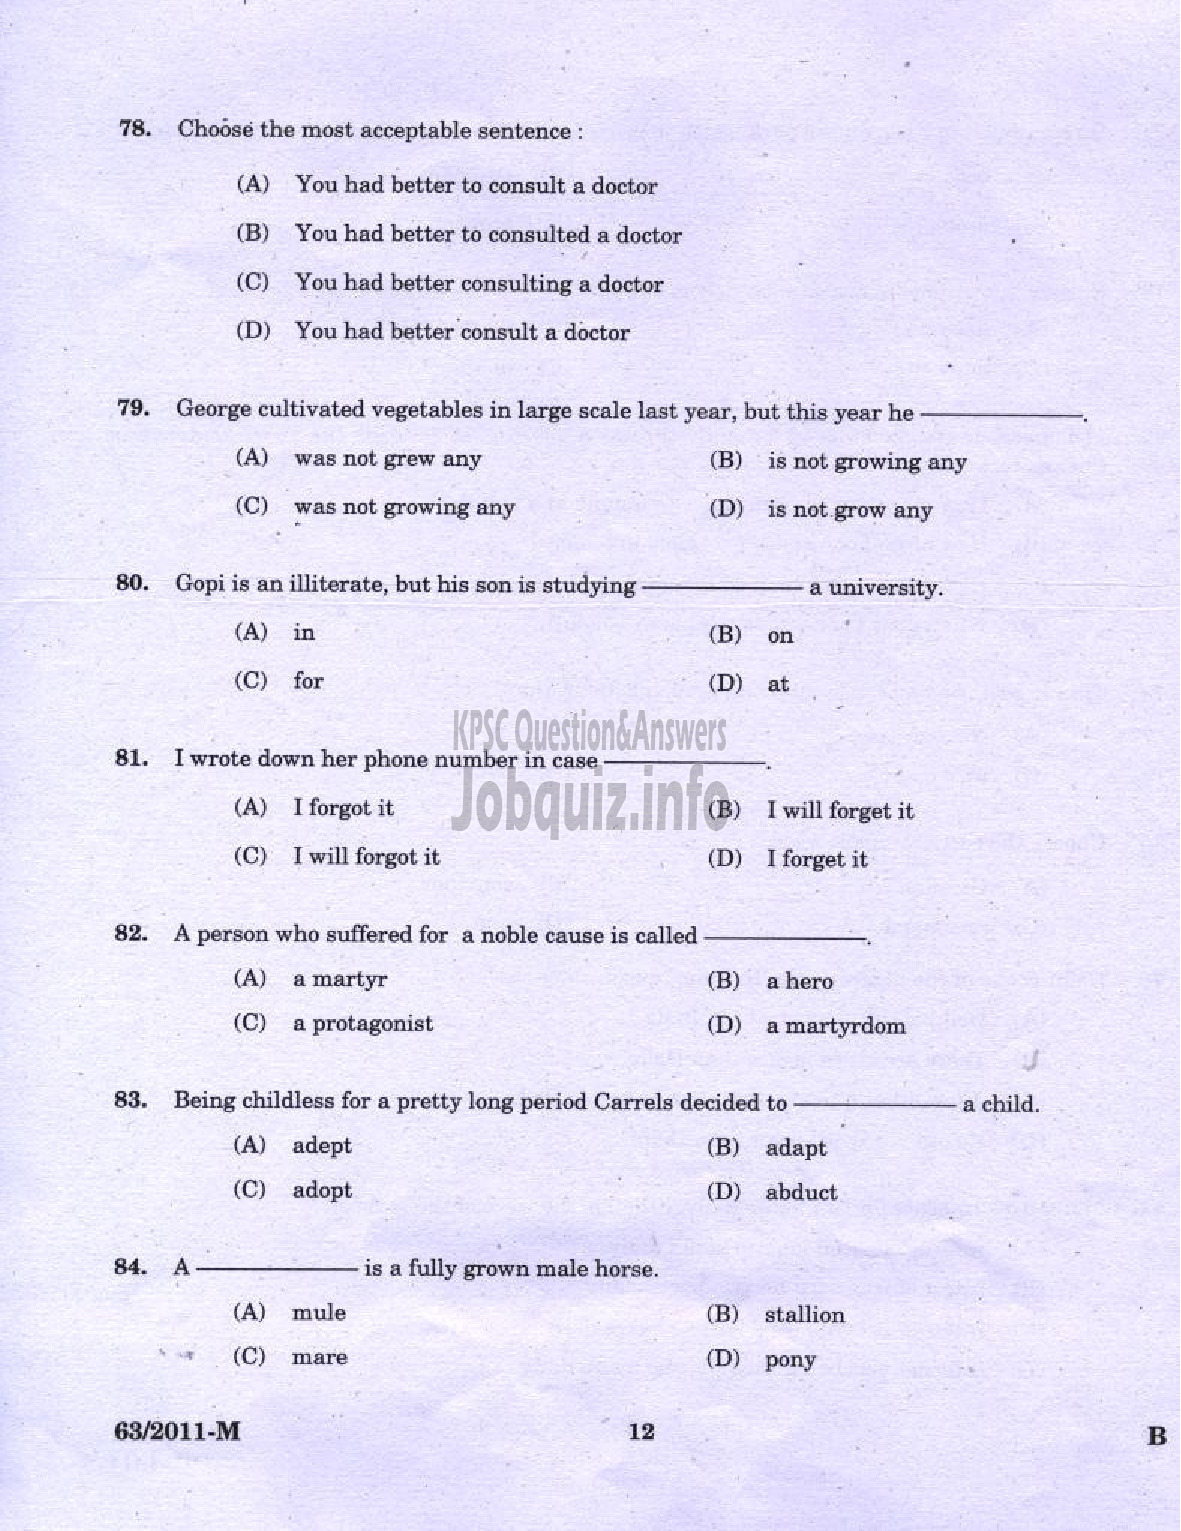 Kerala PSC Question Paper - LDC 2011 KOTTAYAM DISTRICT ( Malayalam ) -10